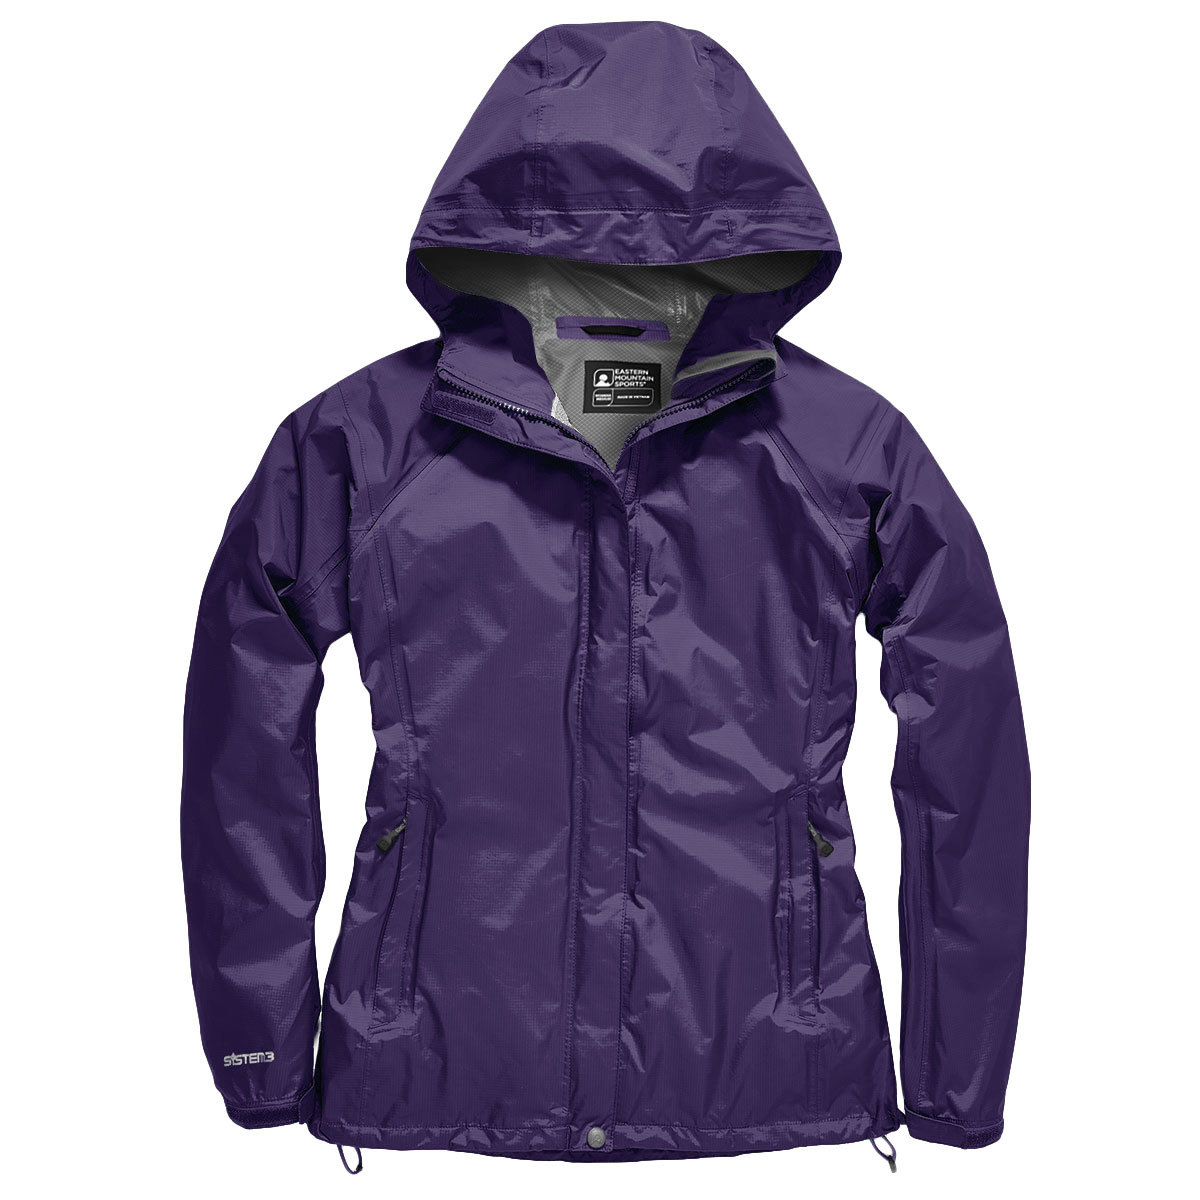 Ems Women's Thunderhead Jacket - Purple, XS